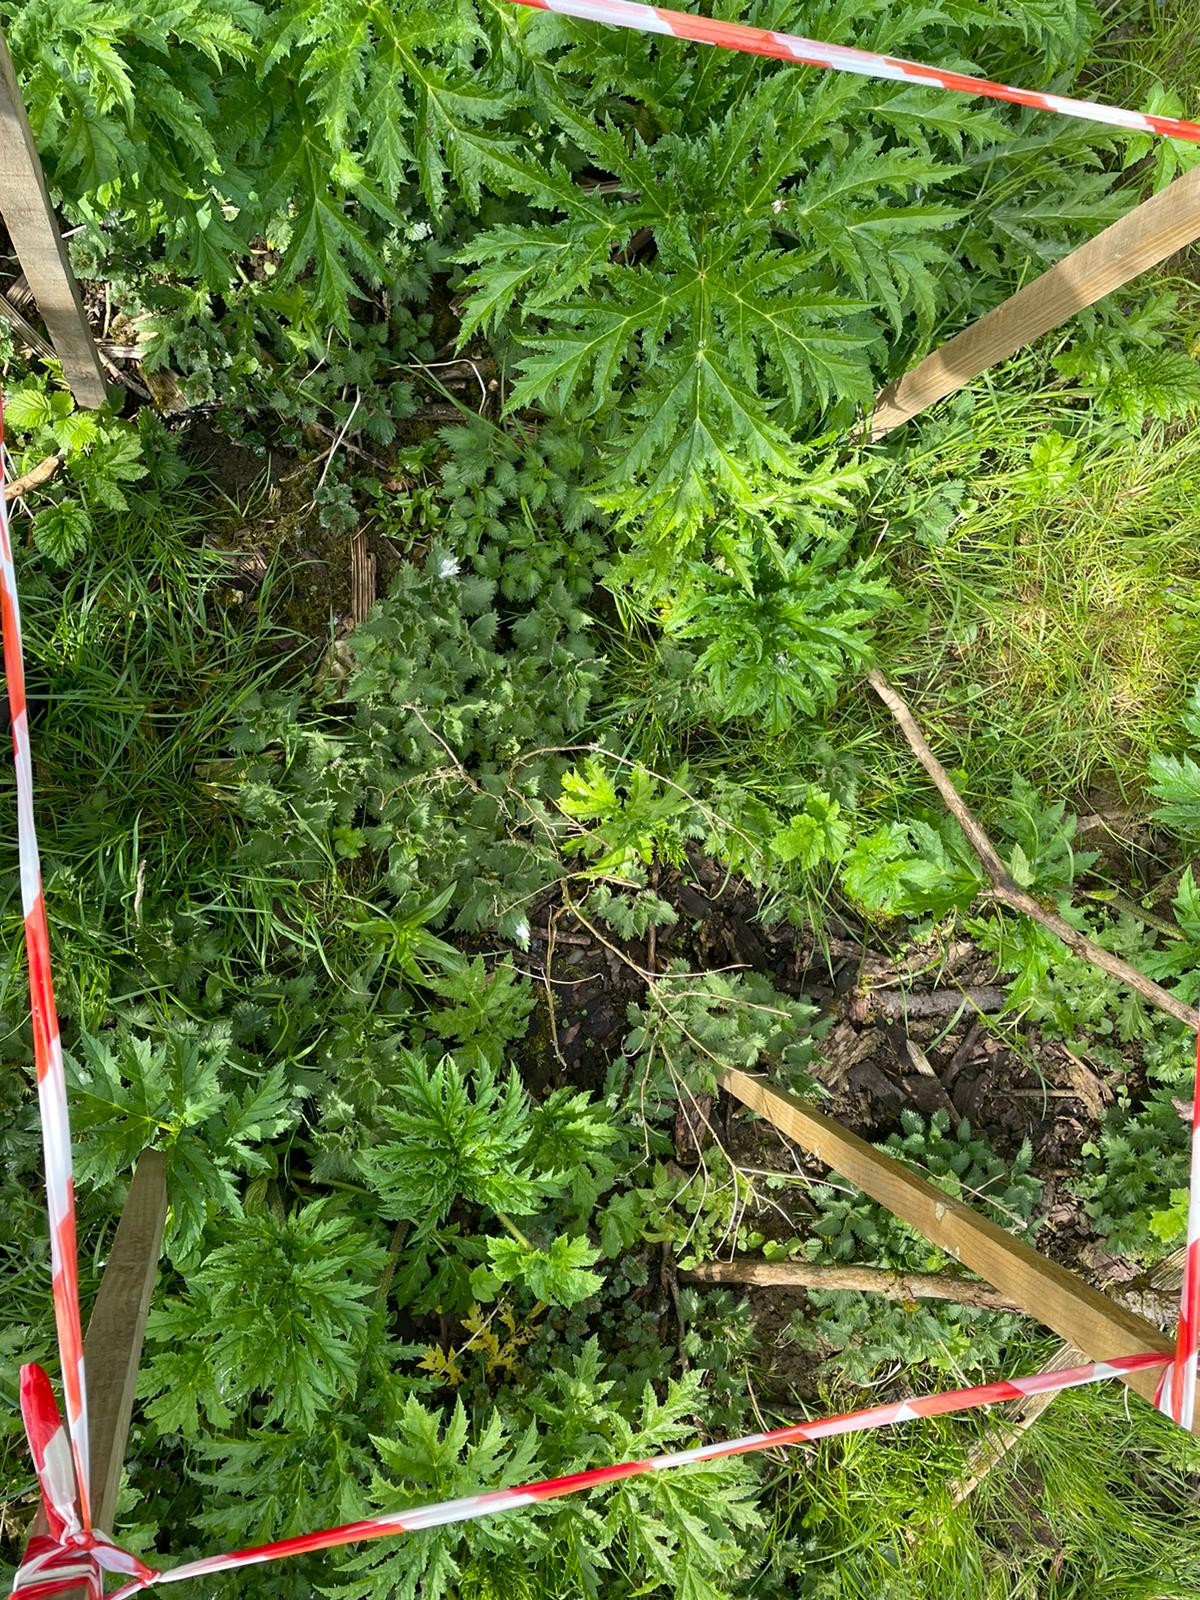 Close up photo of same plot showing hogweed seedling and native vegetation